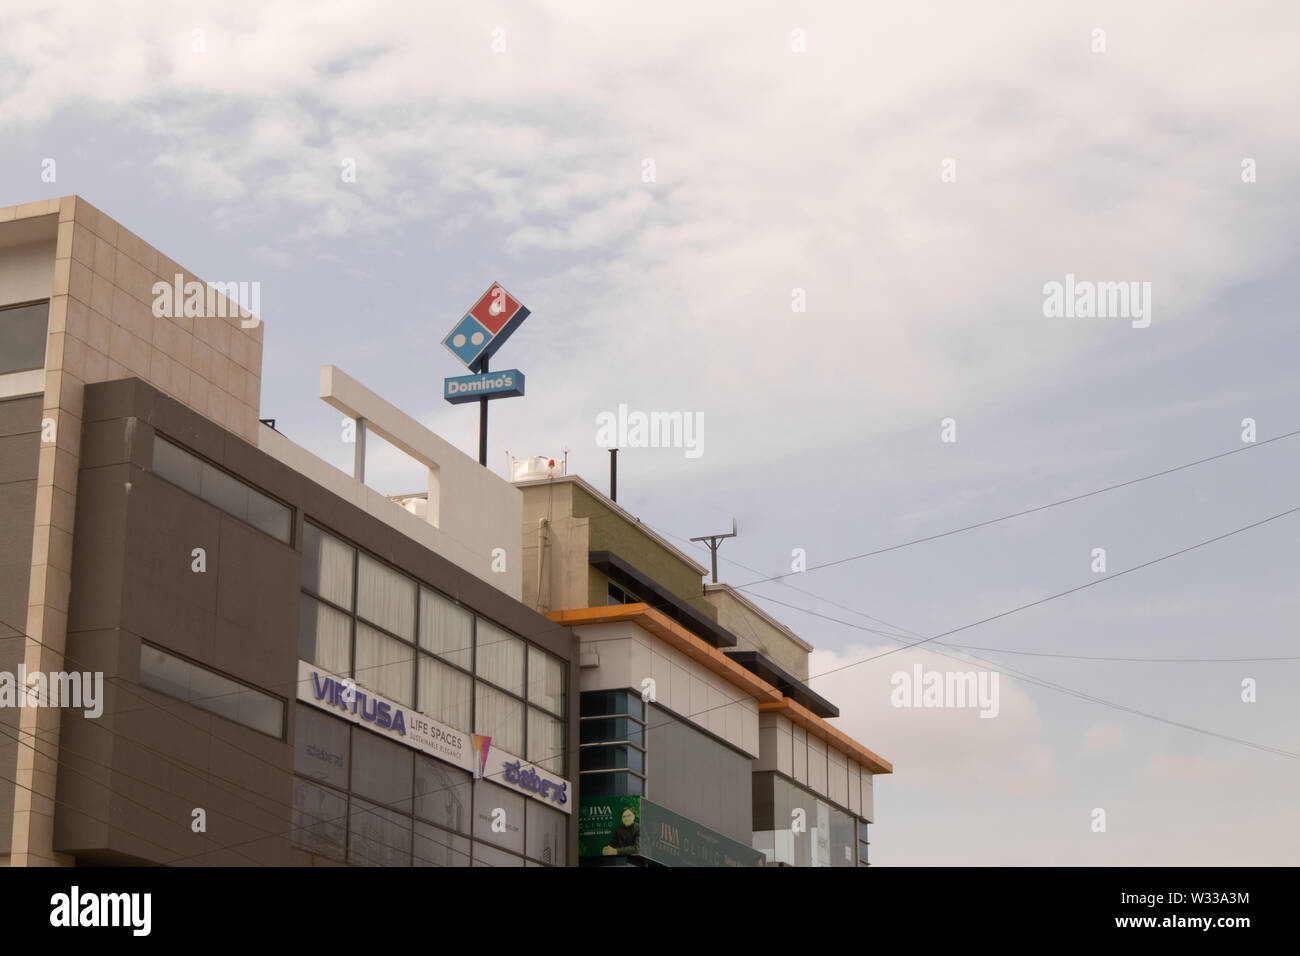 Bengaluru, India June 27,2019 : Domino's Pizza billboard on top of the building at Bengaluru. Stock Photo